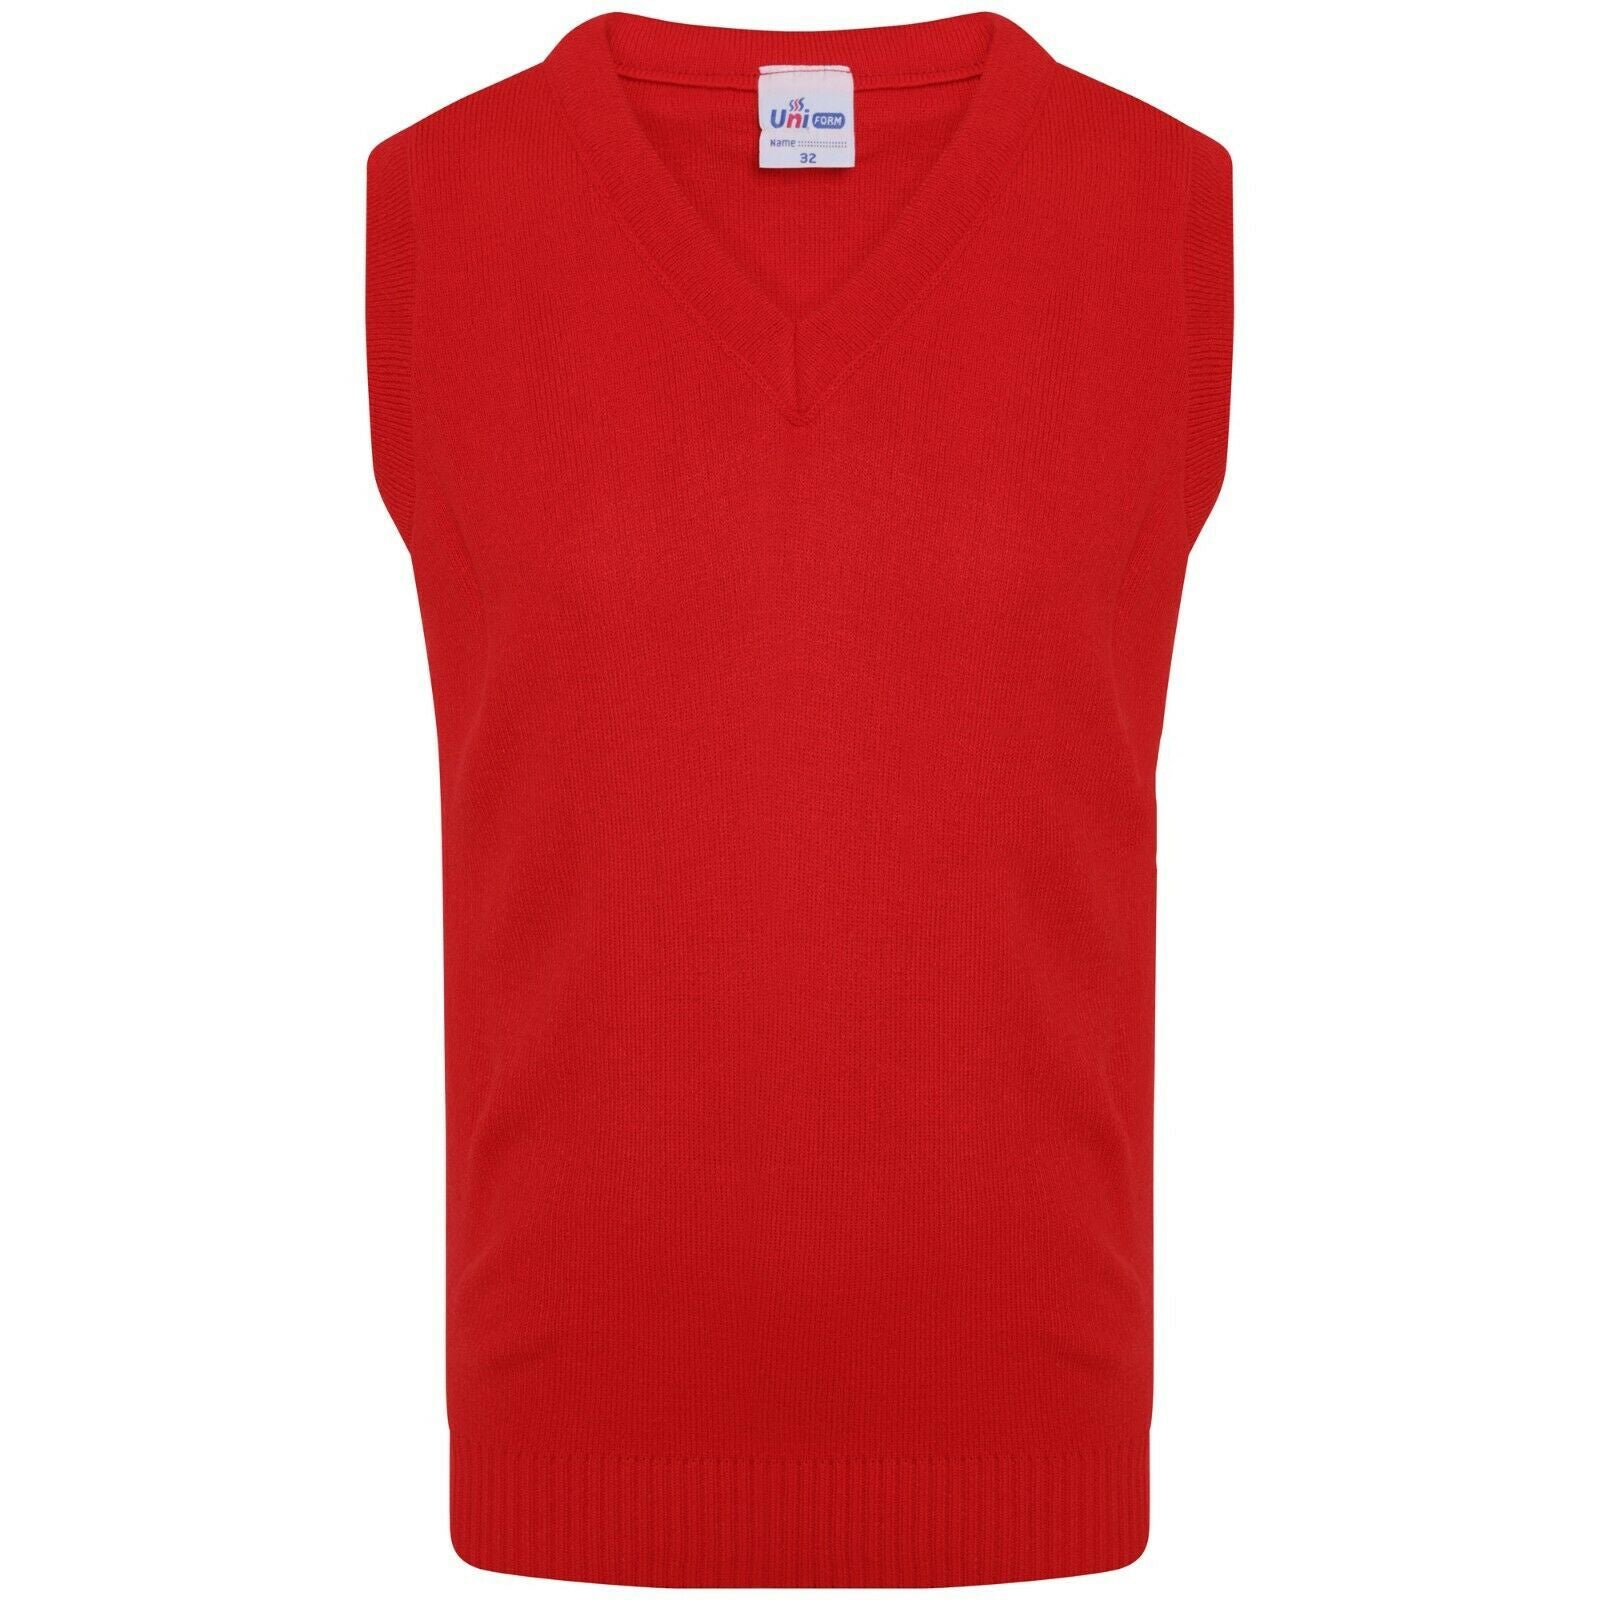 Unisex Boys Girls Kids V Neck School Uniform  Knitted Sleeveless Tank Top Jumper -Red